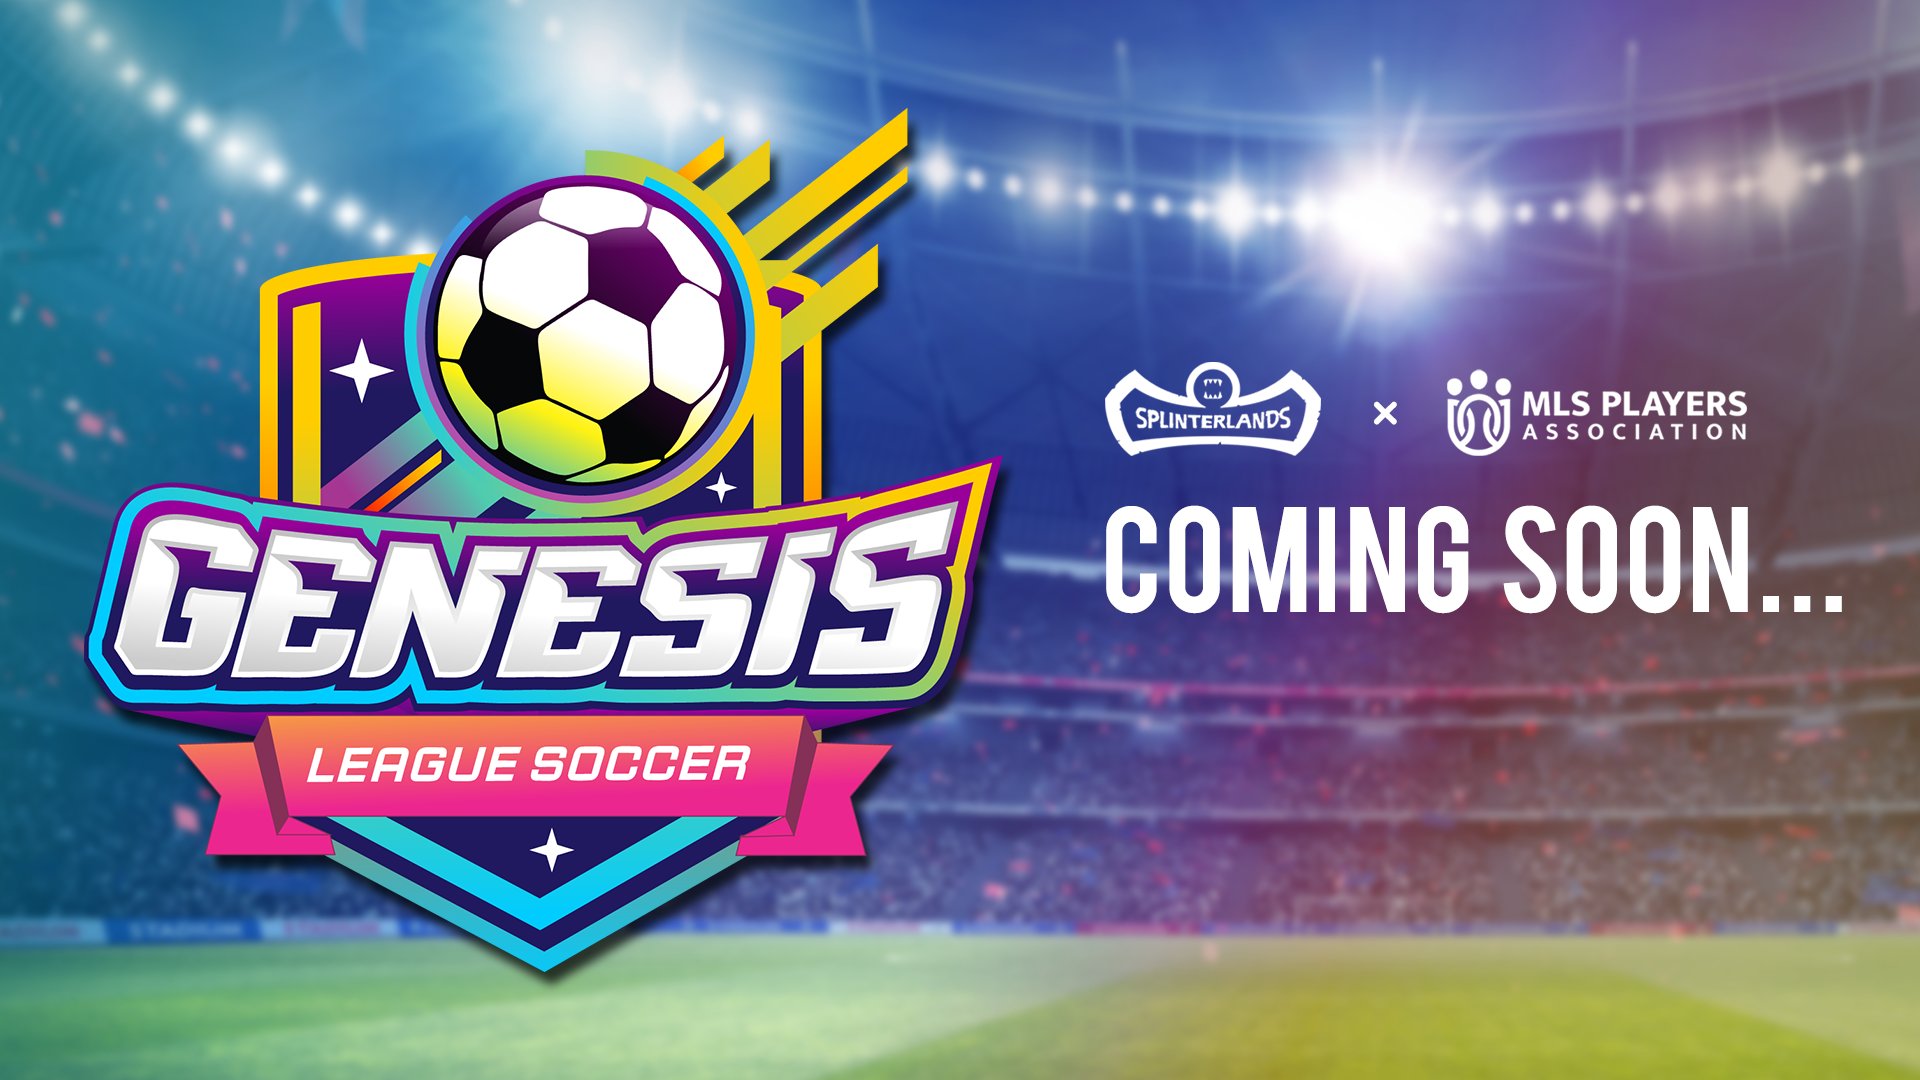 Splinterlands Reveals Genesis League Soccer